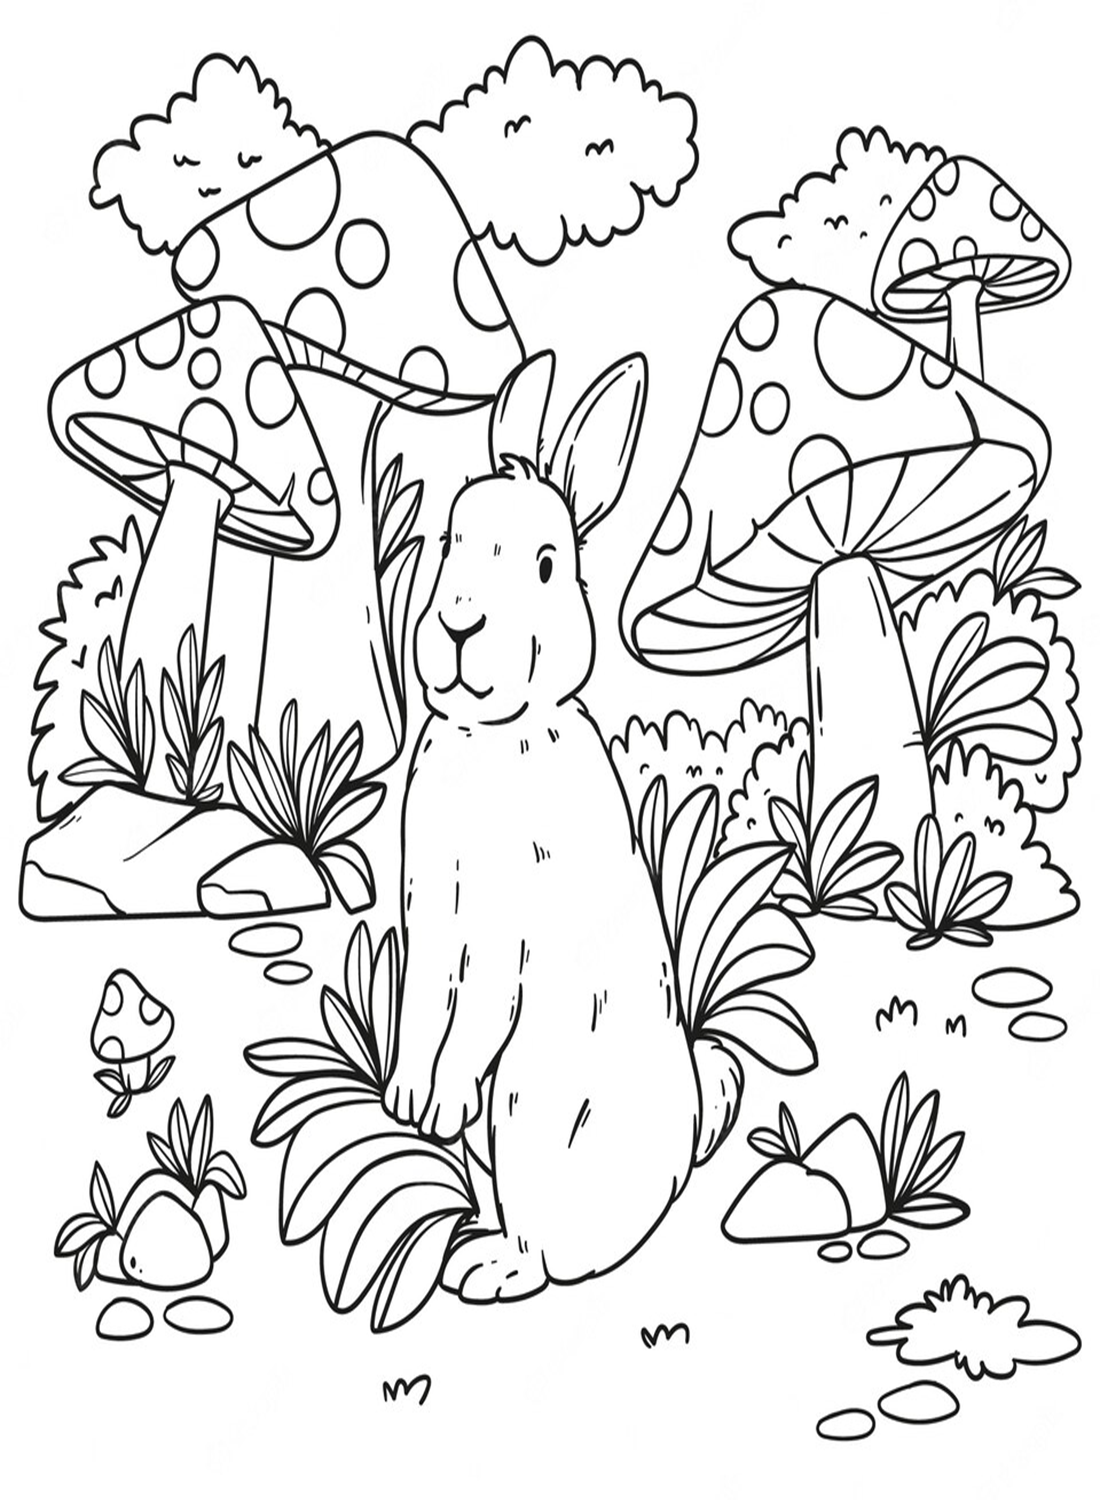 Rabbit In Mushroom Forest from Rabbit